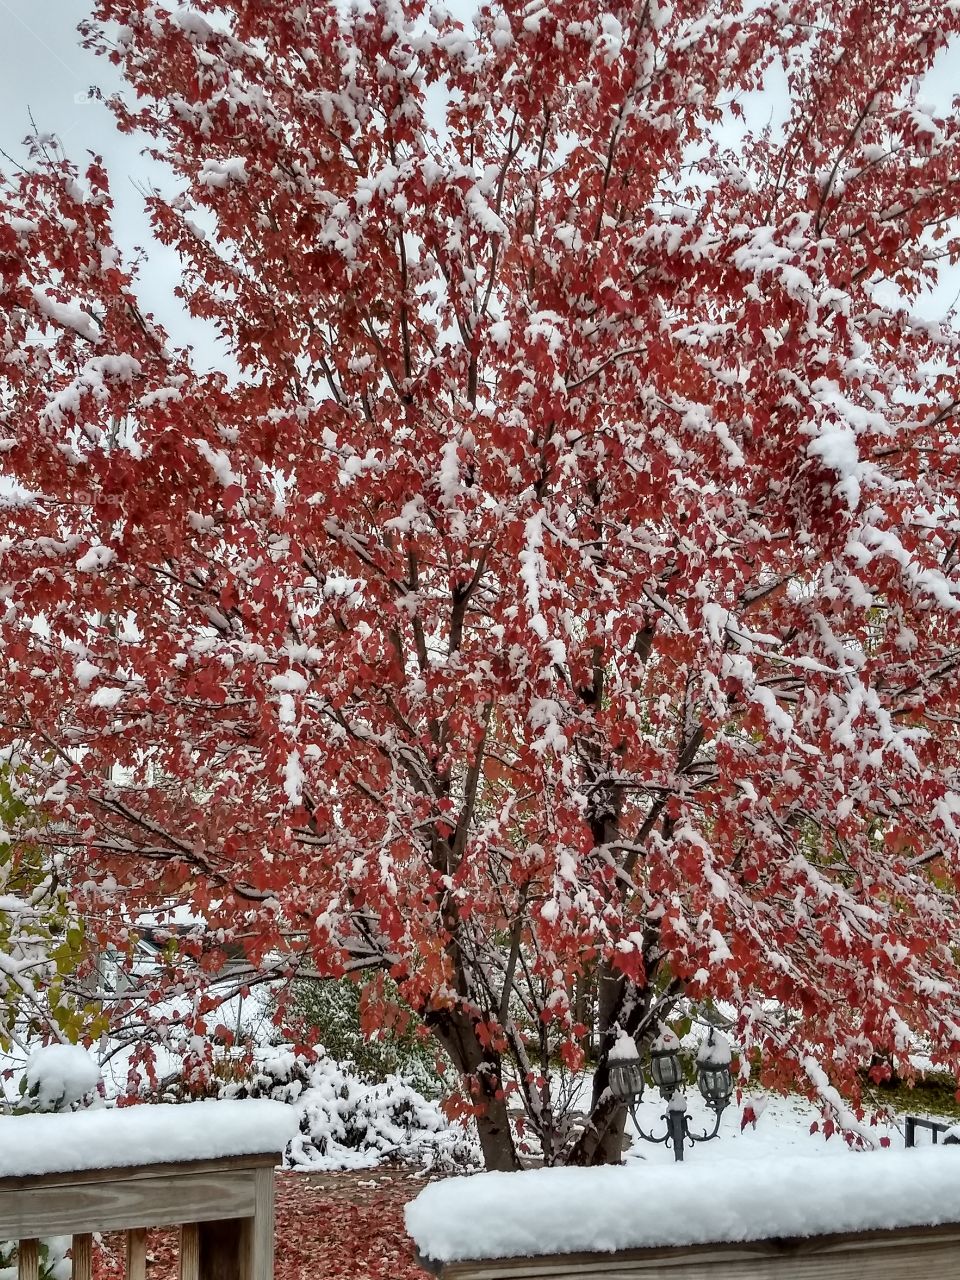 our backyard tree after a snowfall.  Missouri